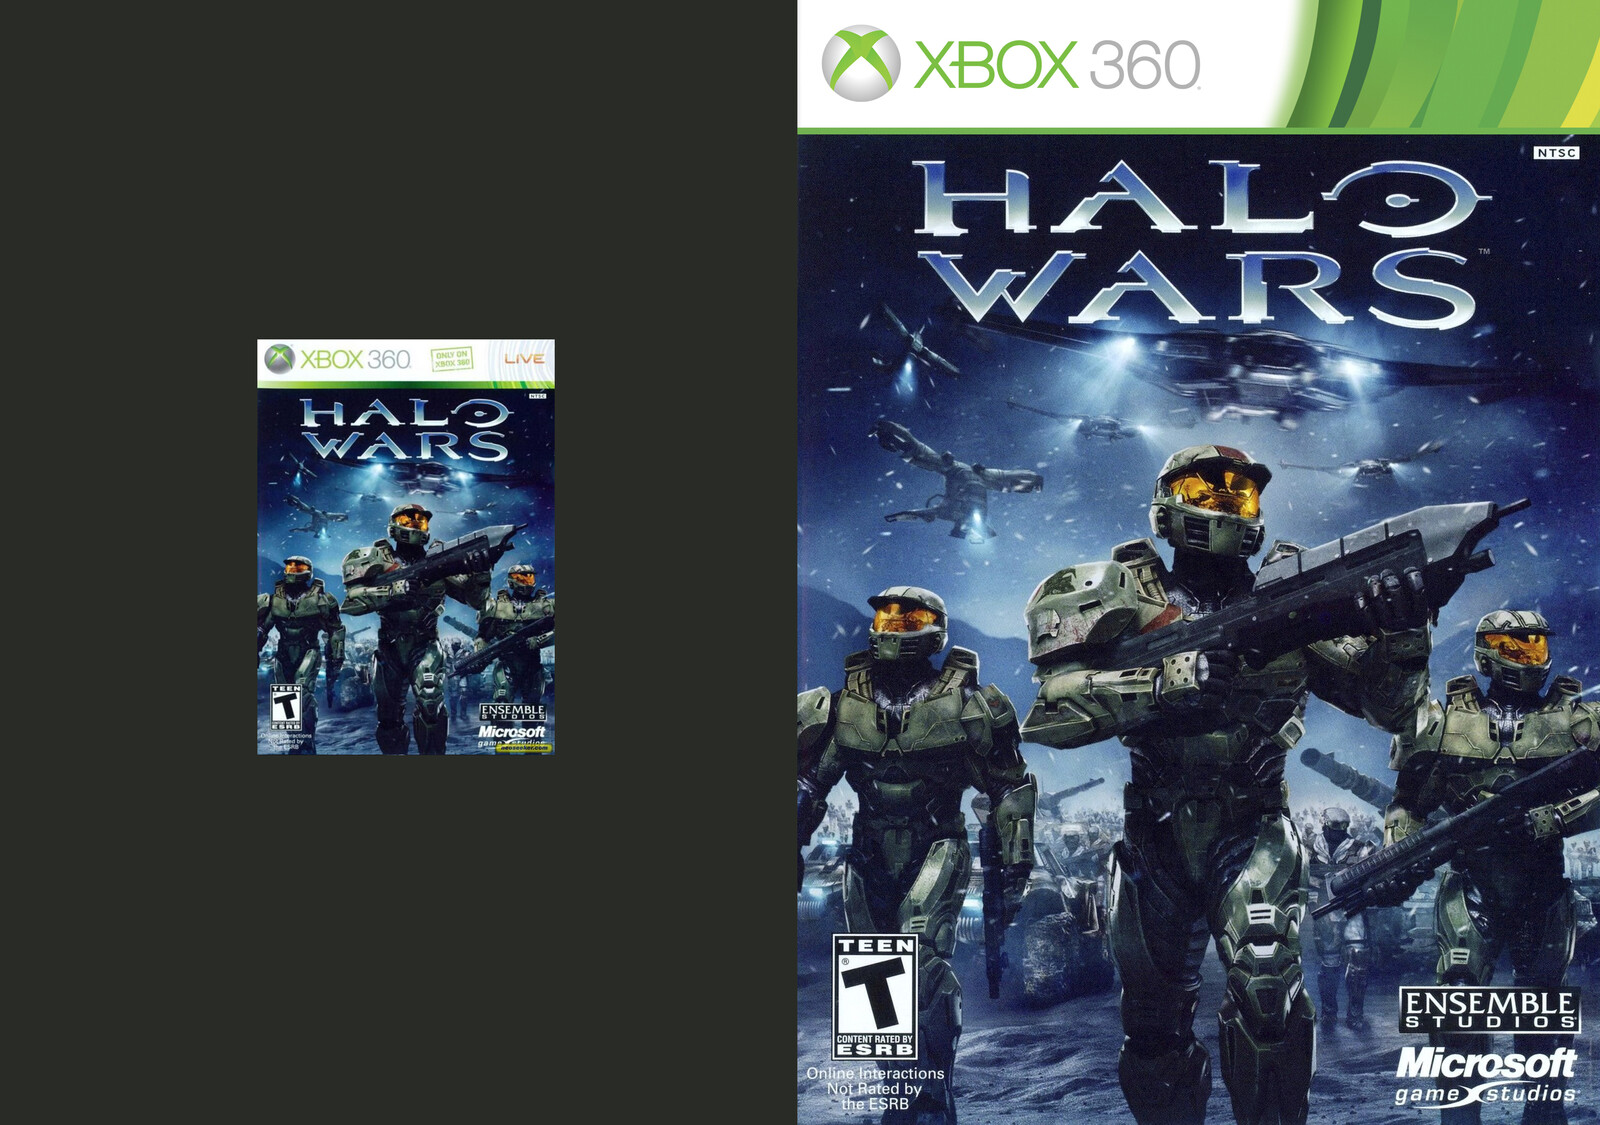 Halo Wars (original scan cover vs. upscaled)